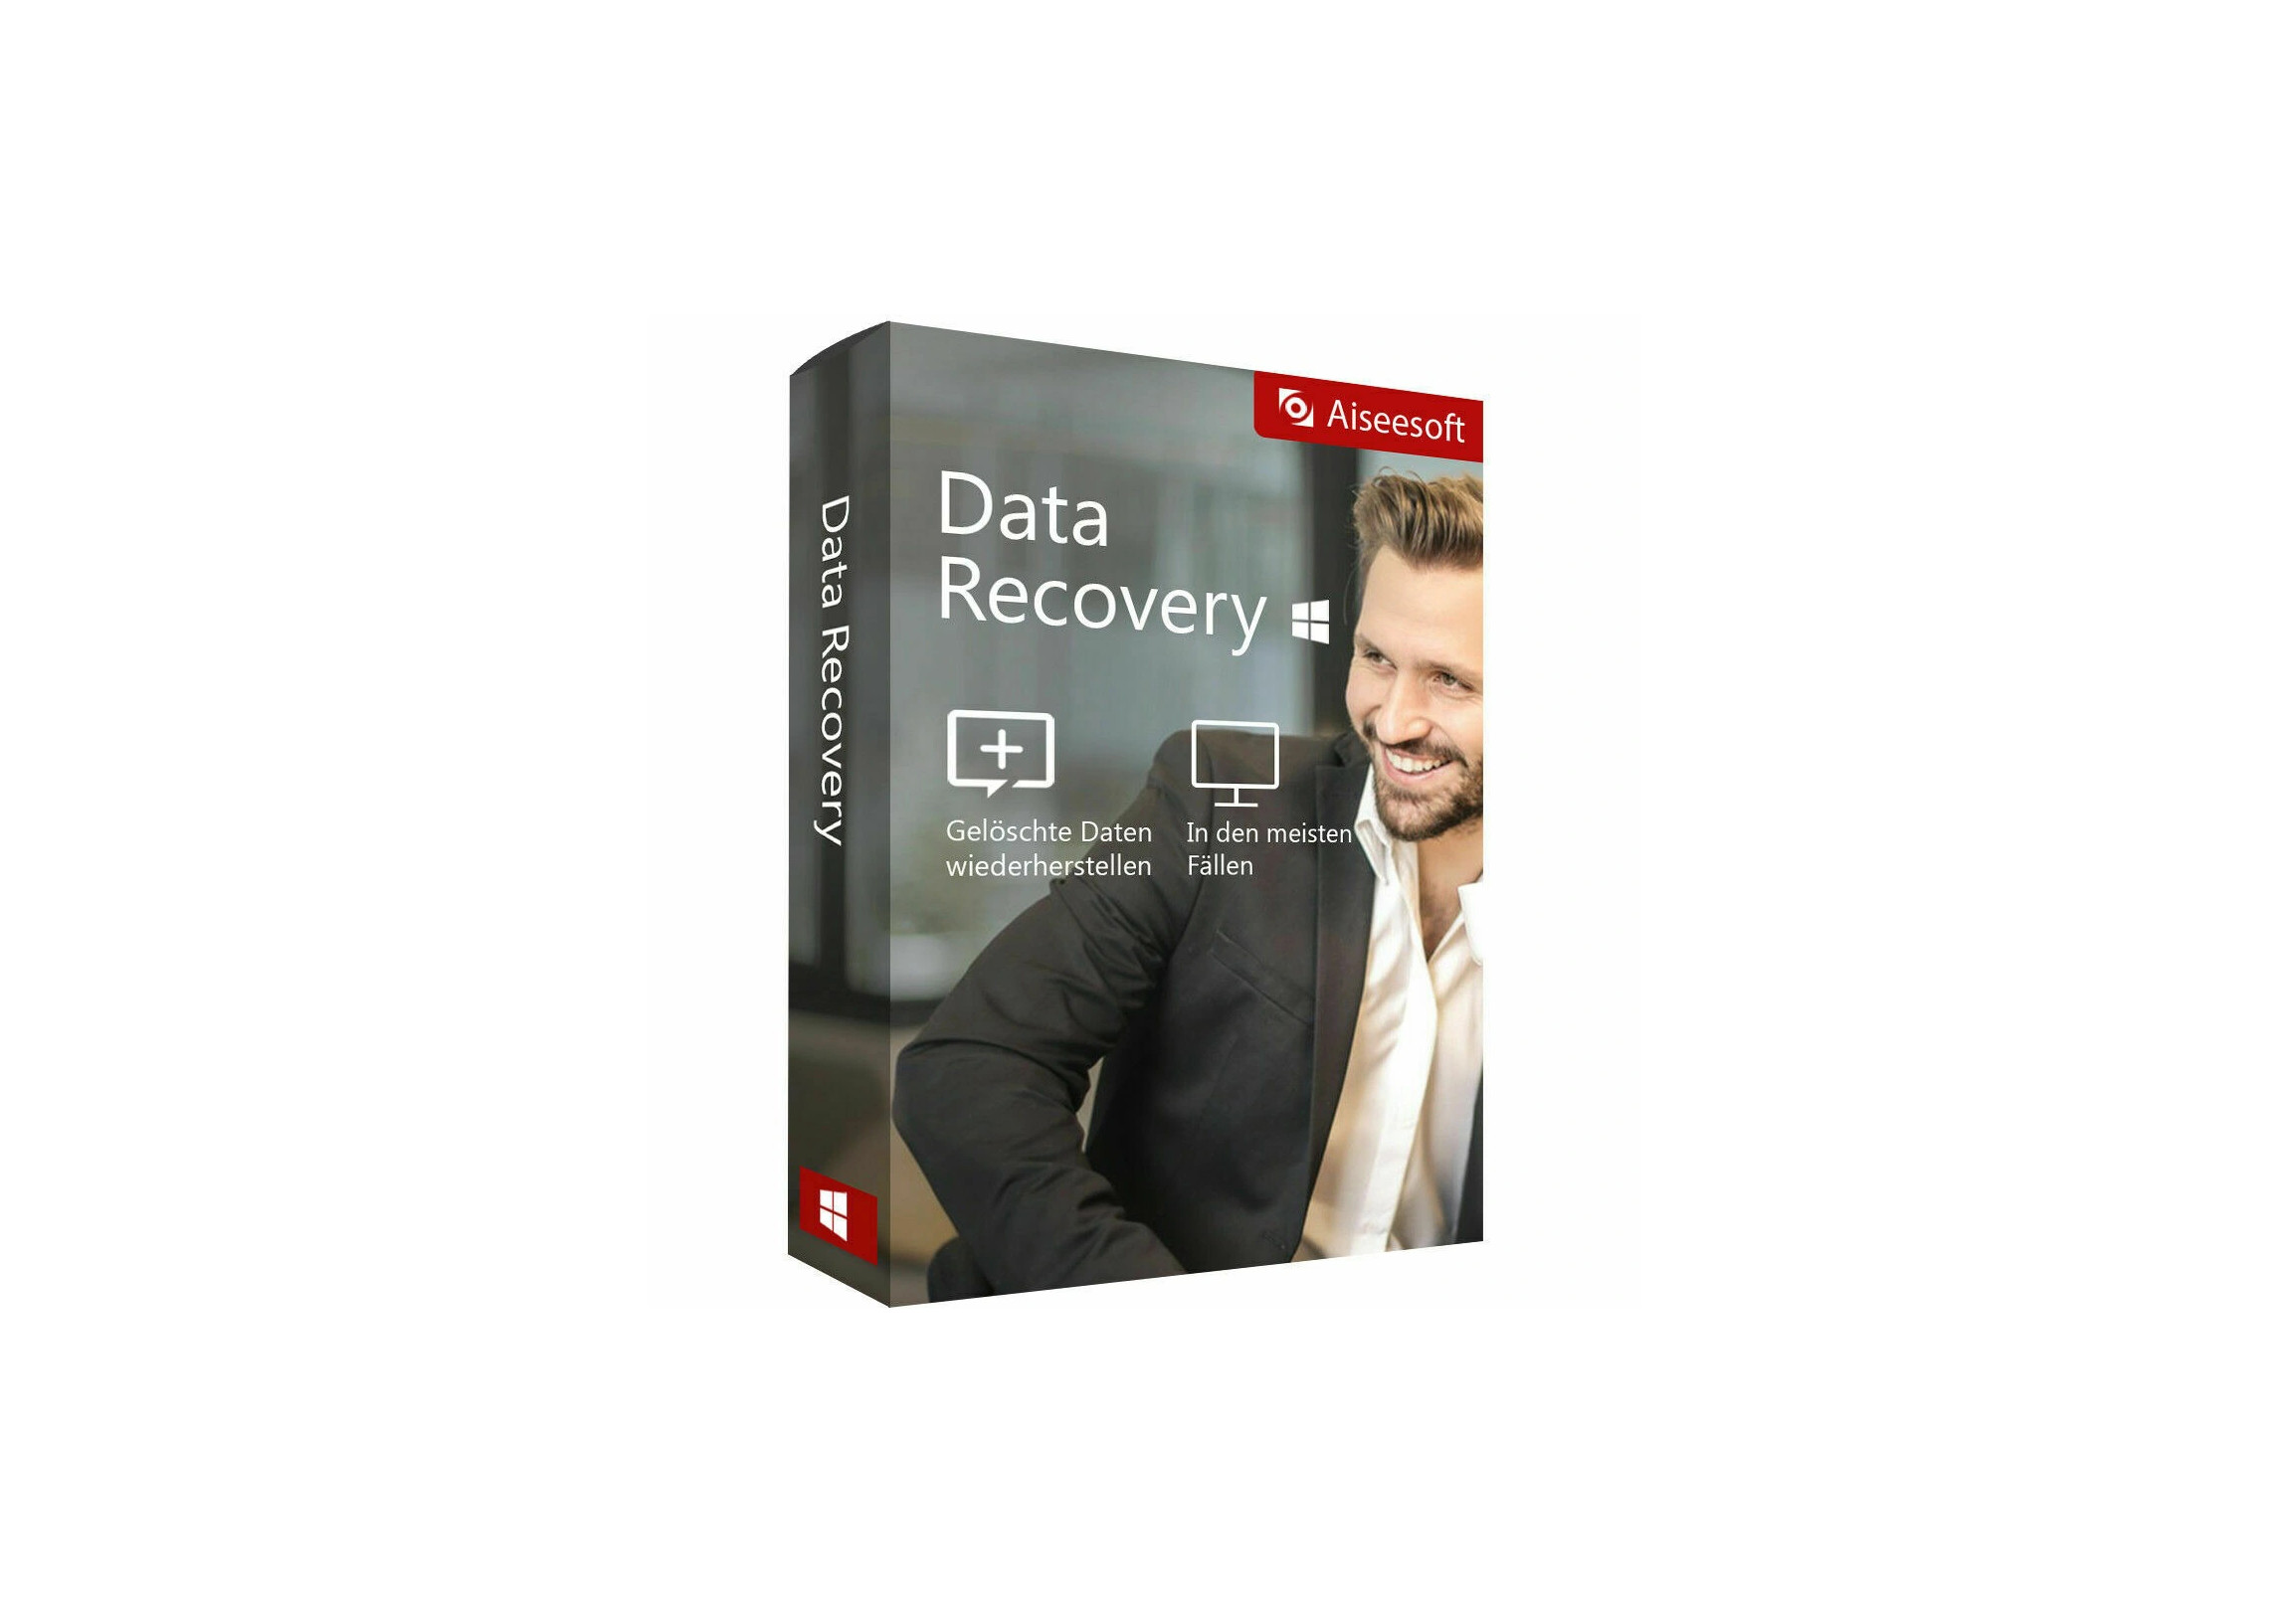 (2.25$) Aiseesoft Data Recovery Key (1 Year / 1 PC)